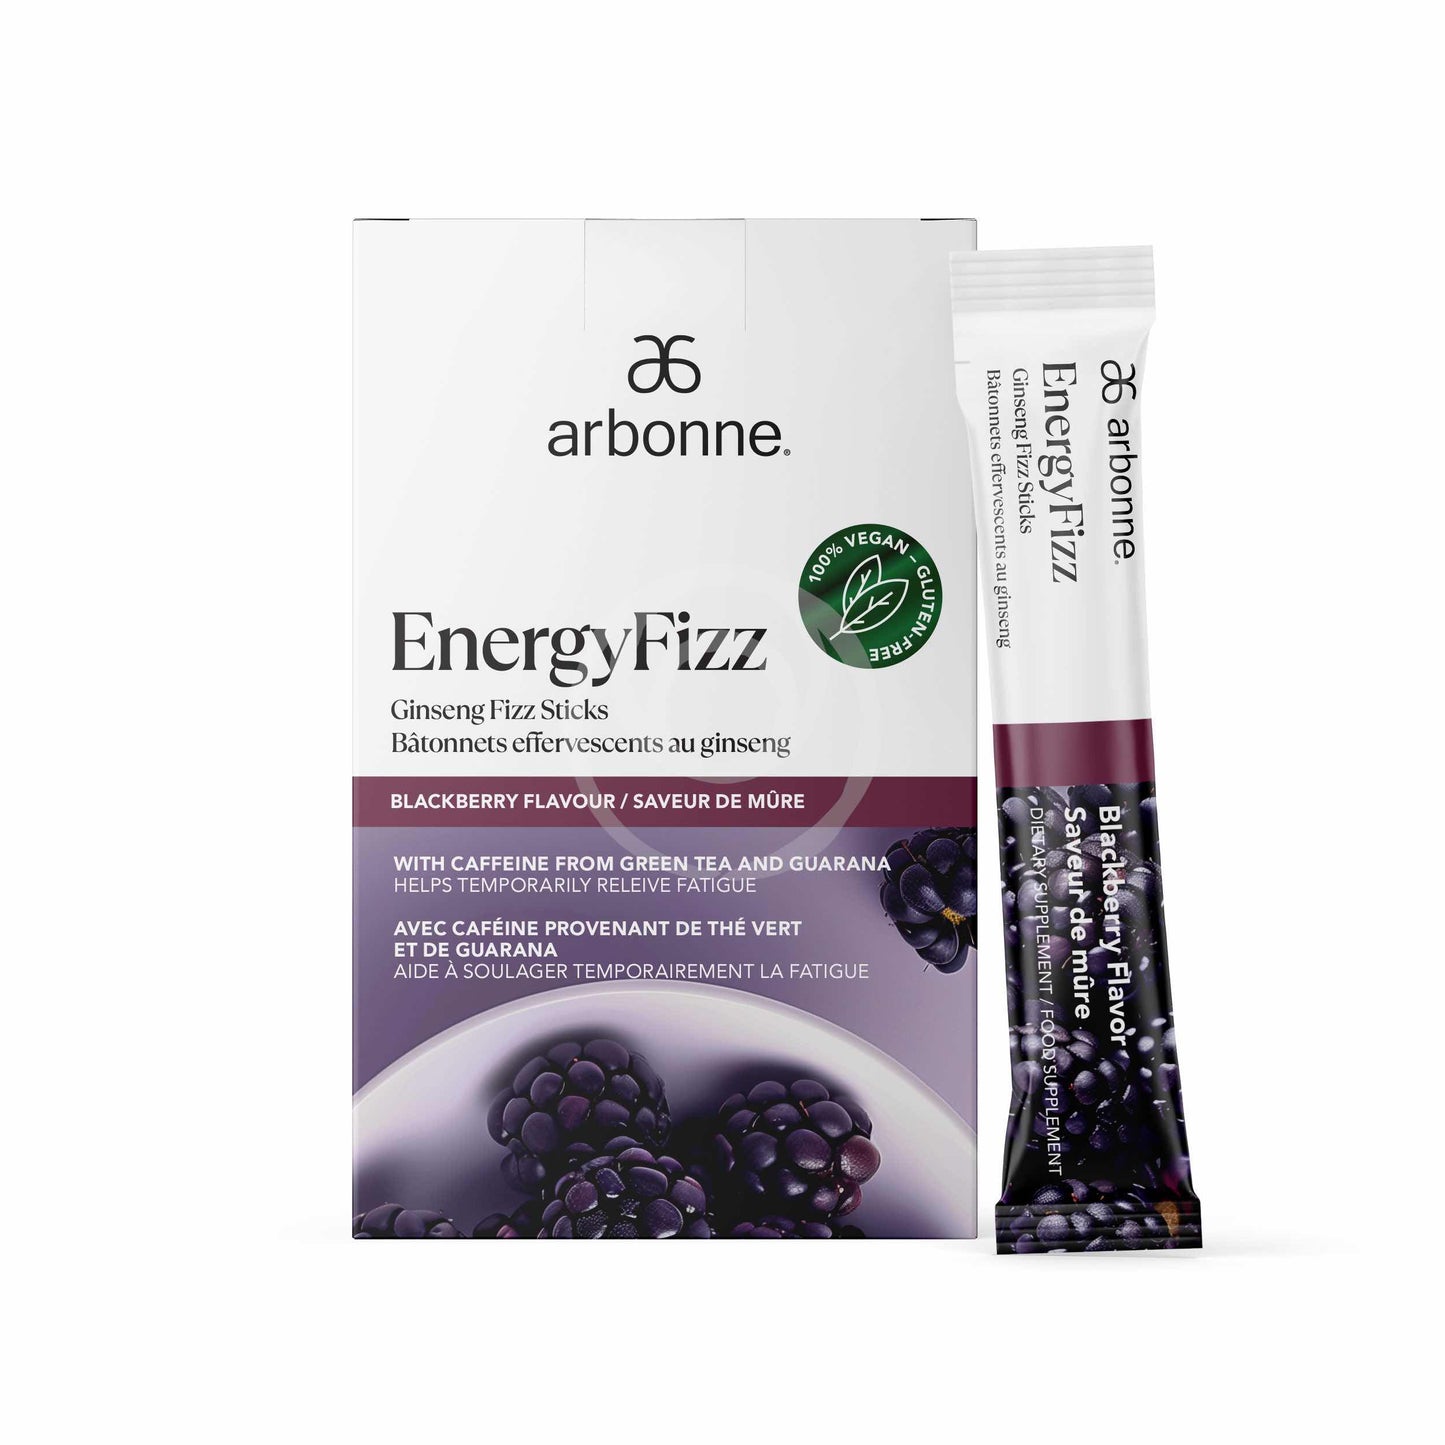 Arbonne EnergyFizz Ginseng Fizz Sticks in Blackberry Flavor, vegan-certified dietary supplement with caffeine from green tea and guarana.